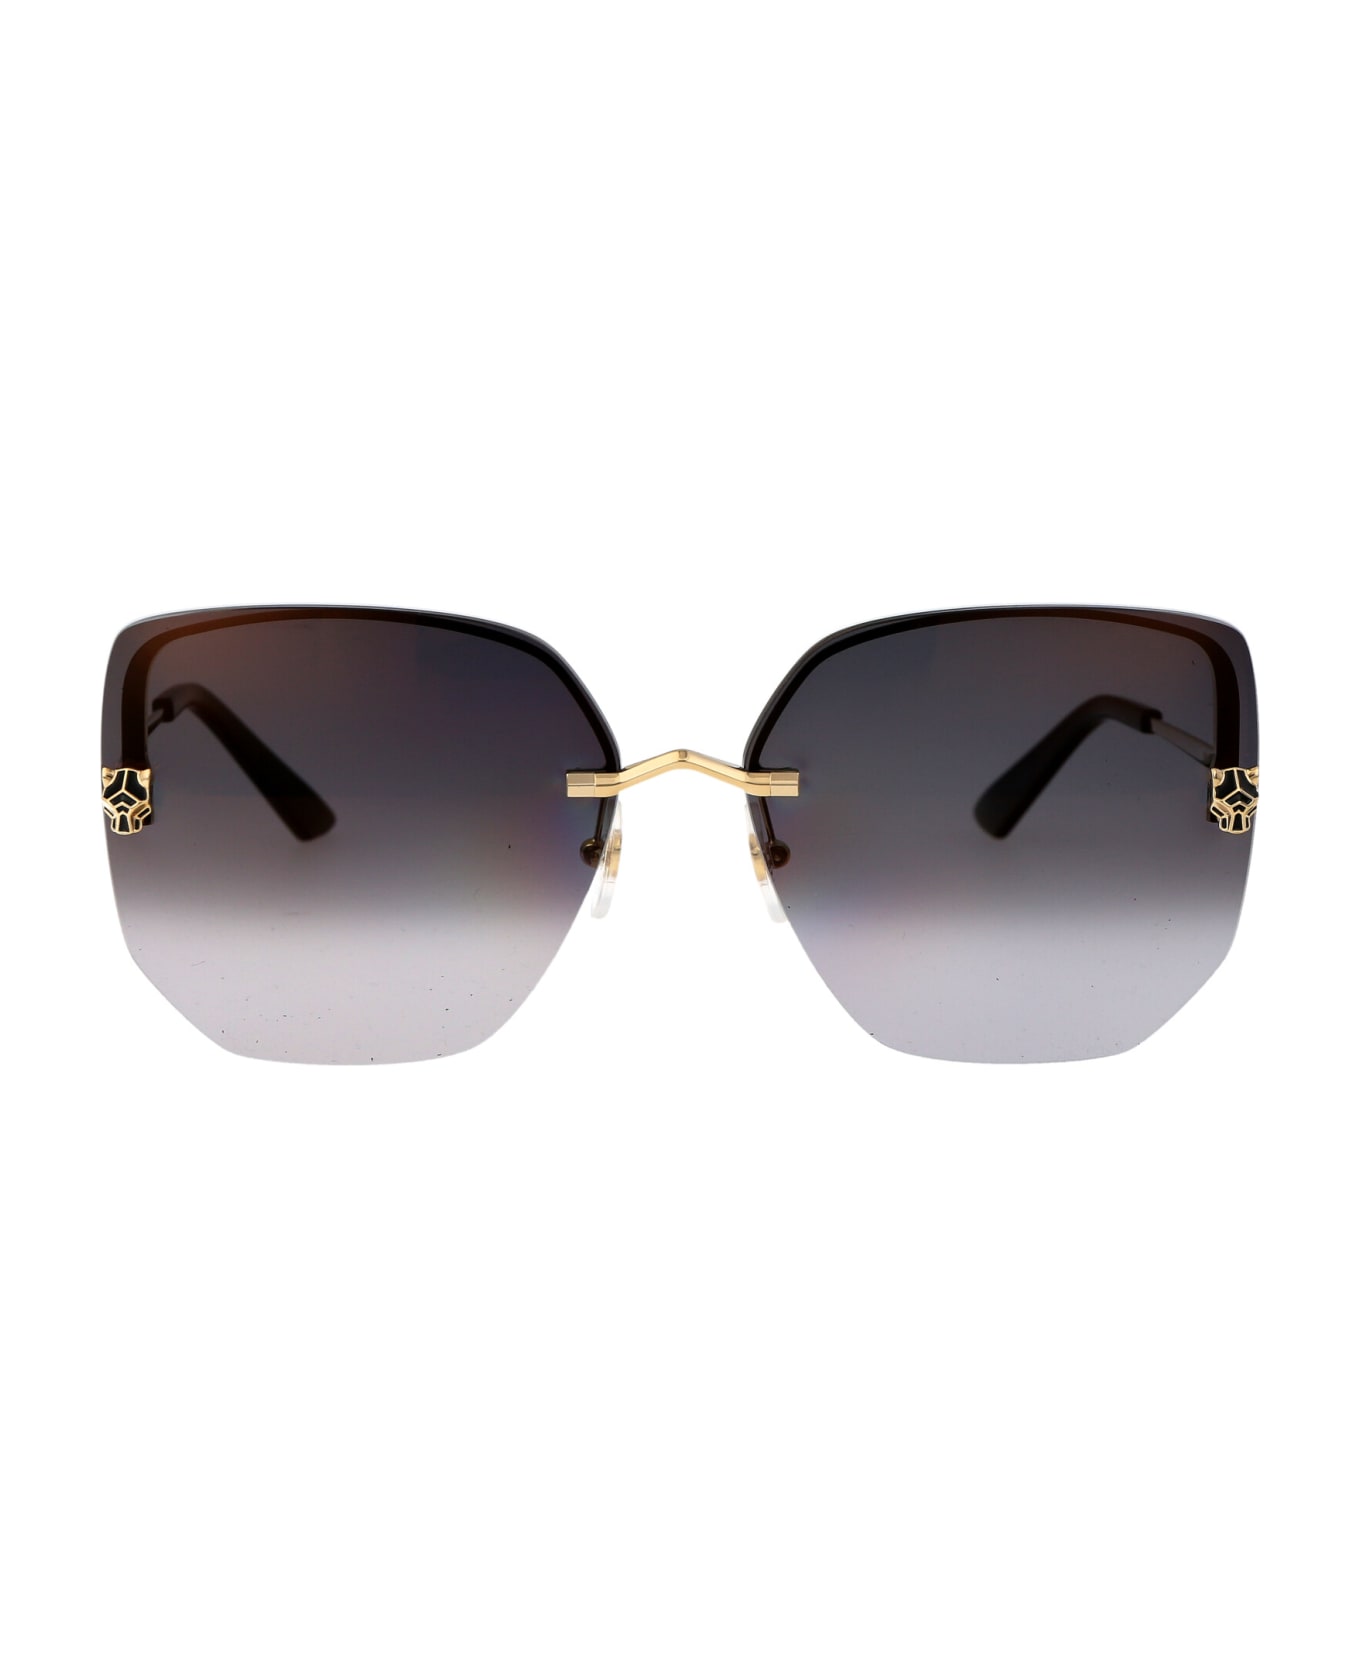 Cartier Eyewear Ct0432s Sunglasses - 001 GOLD GOLD GREY サングラス